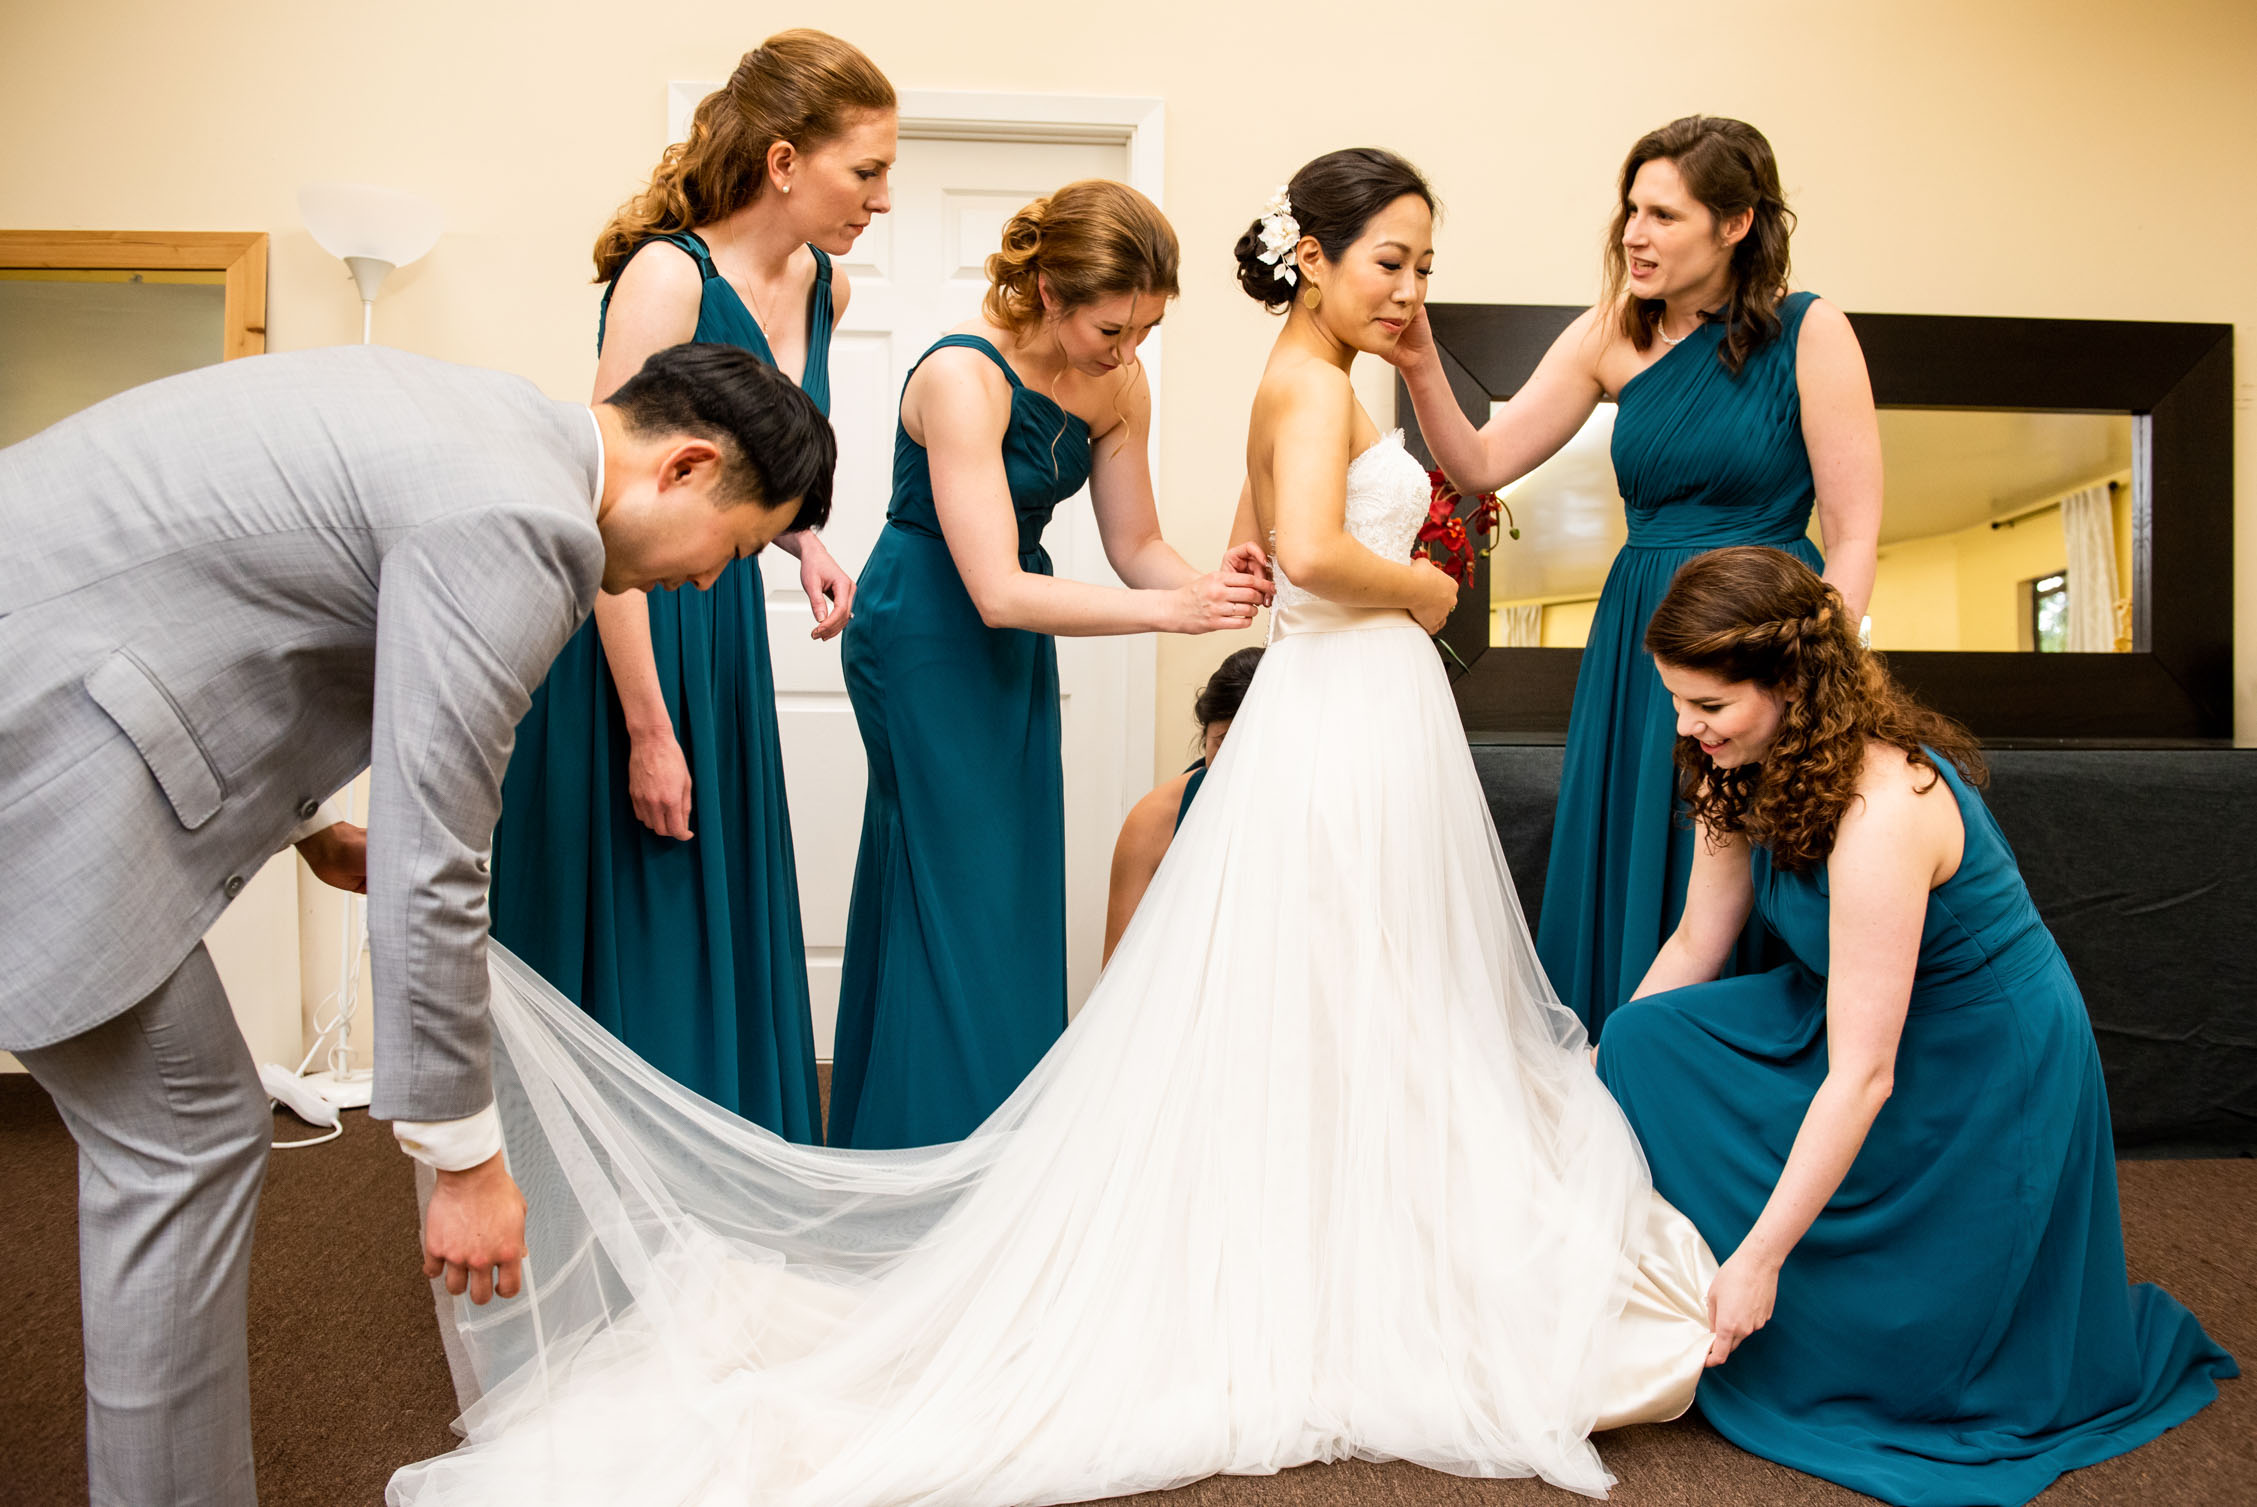 Four bridesmaids and bridesman help the bride get ready